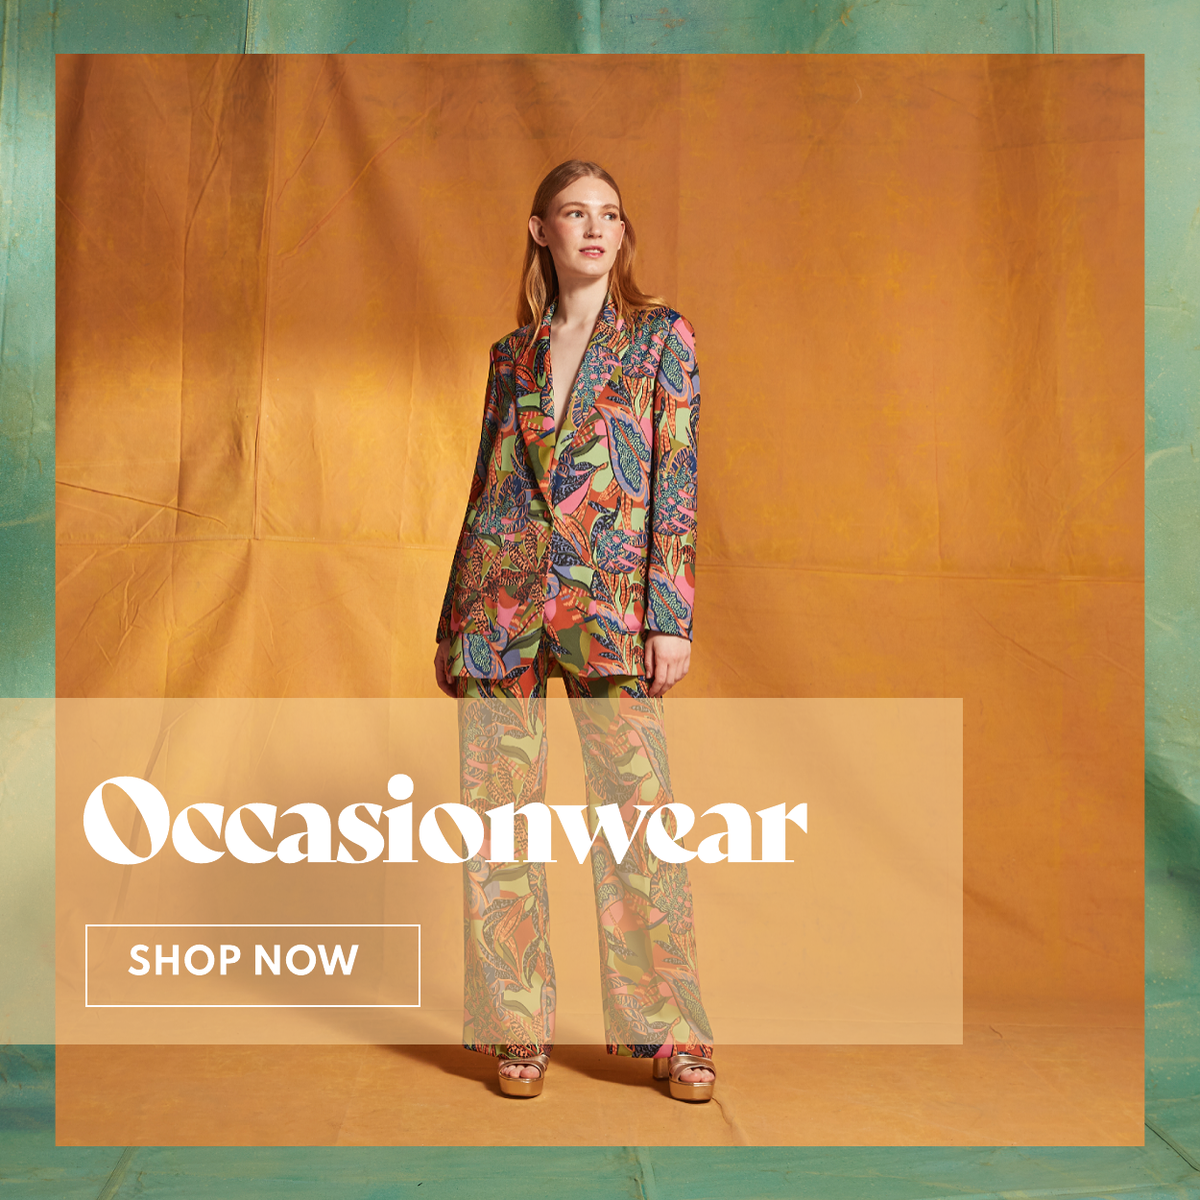 Occassionwear Shop Now